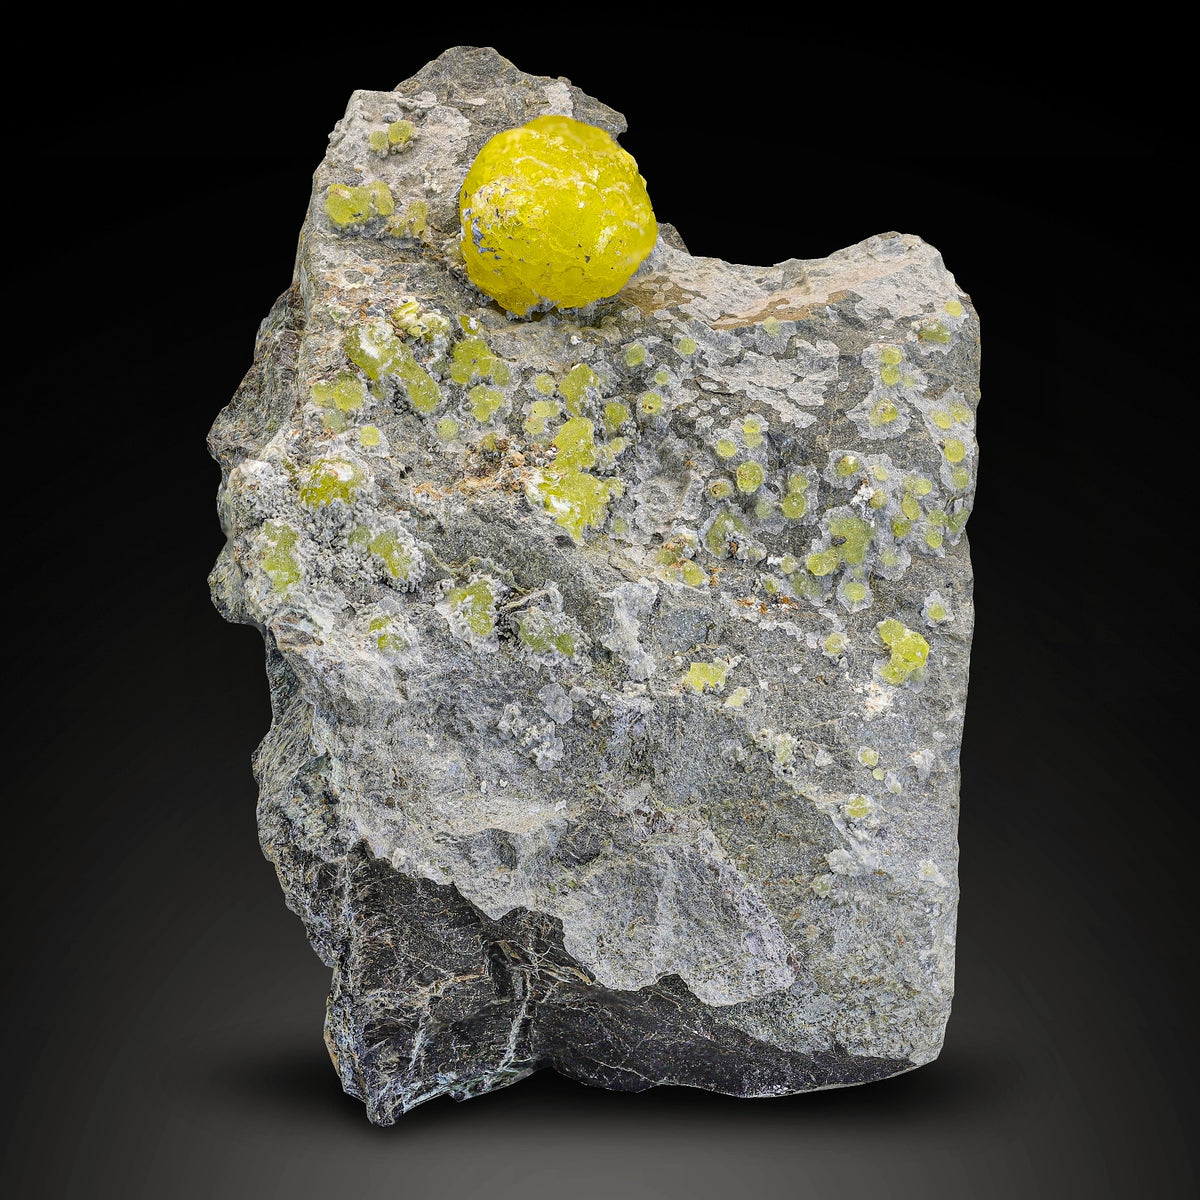 Lemon-yellow Brucite crystal perched on Chromite matrix